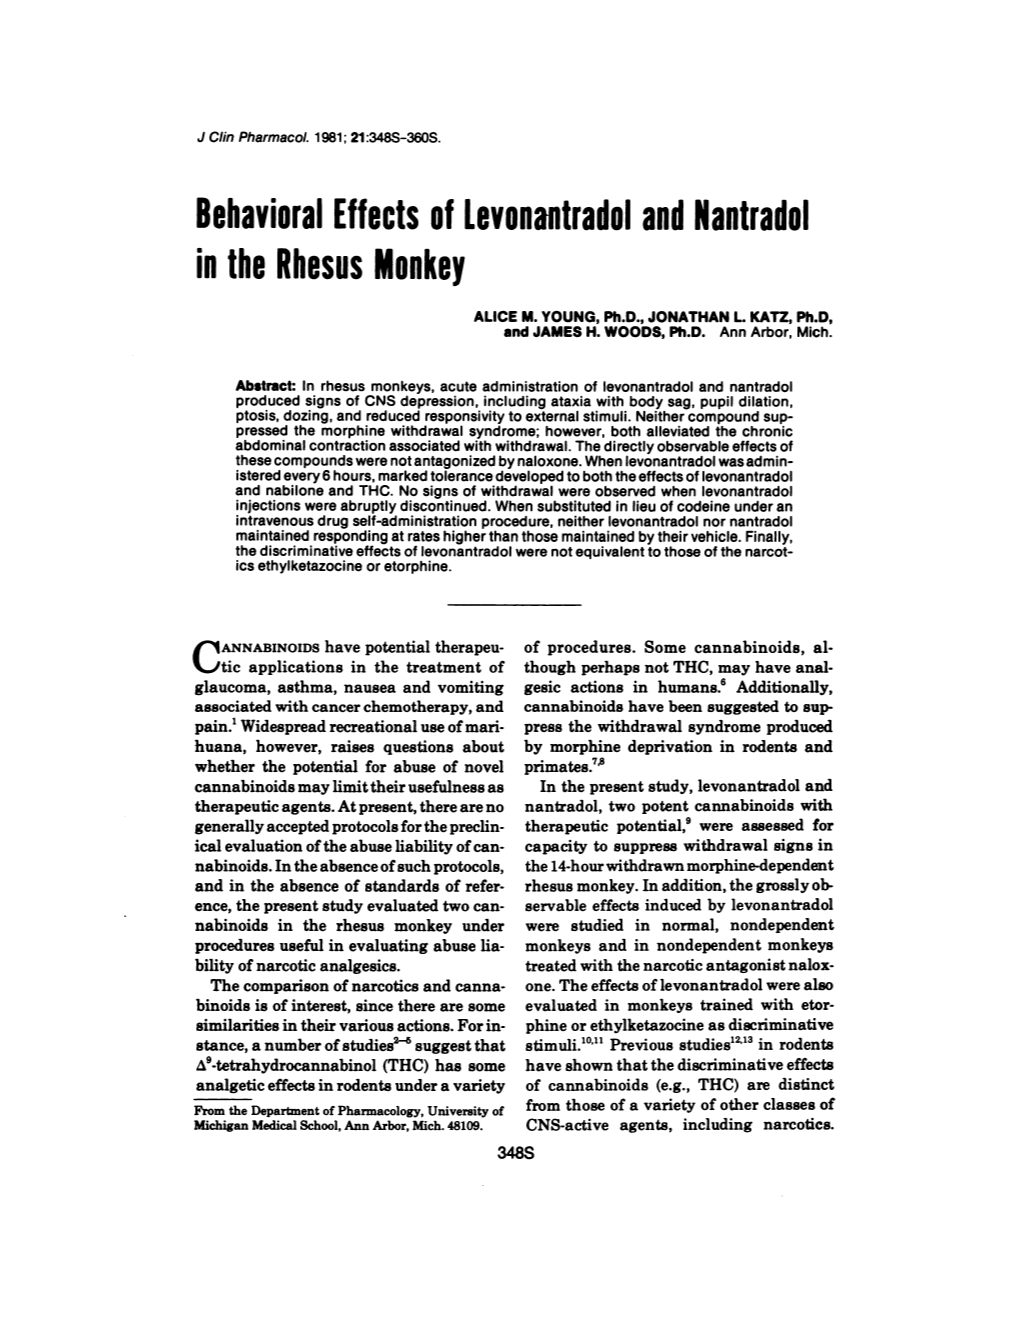 Behavioral Effects of Levonantradol and Nantradol in the Rhesus Monkey